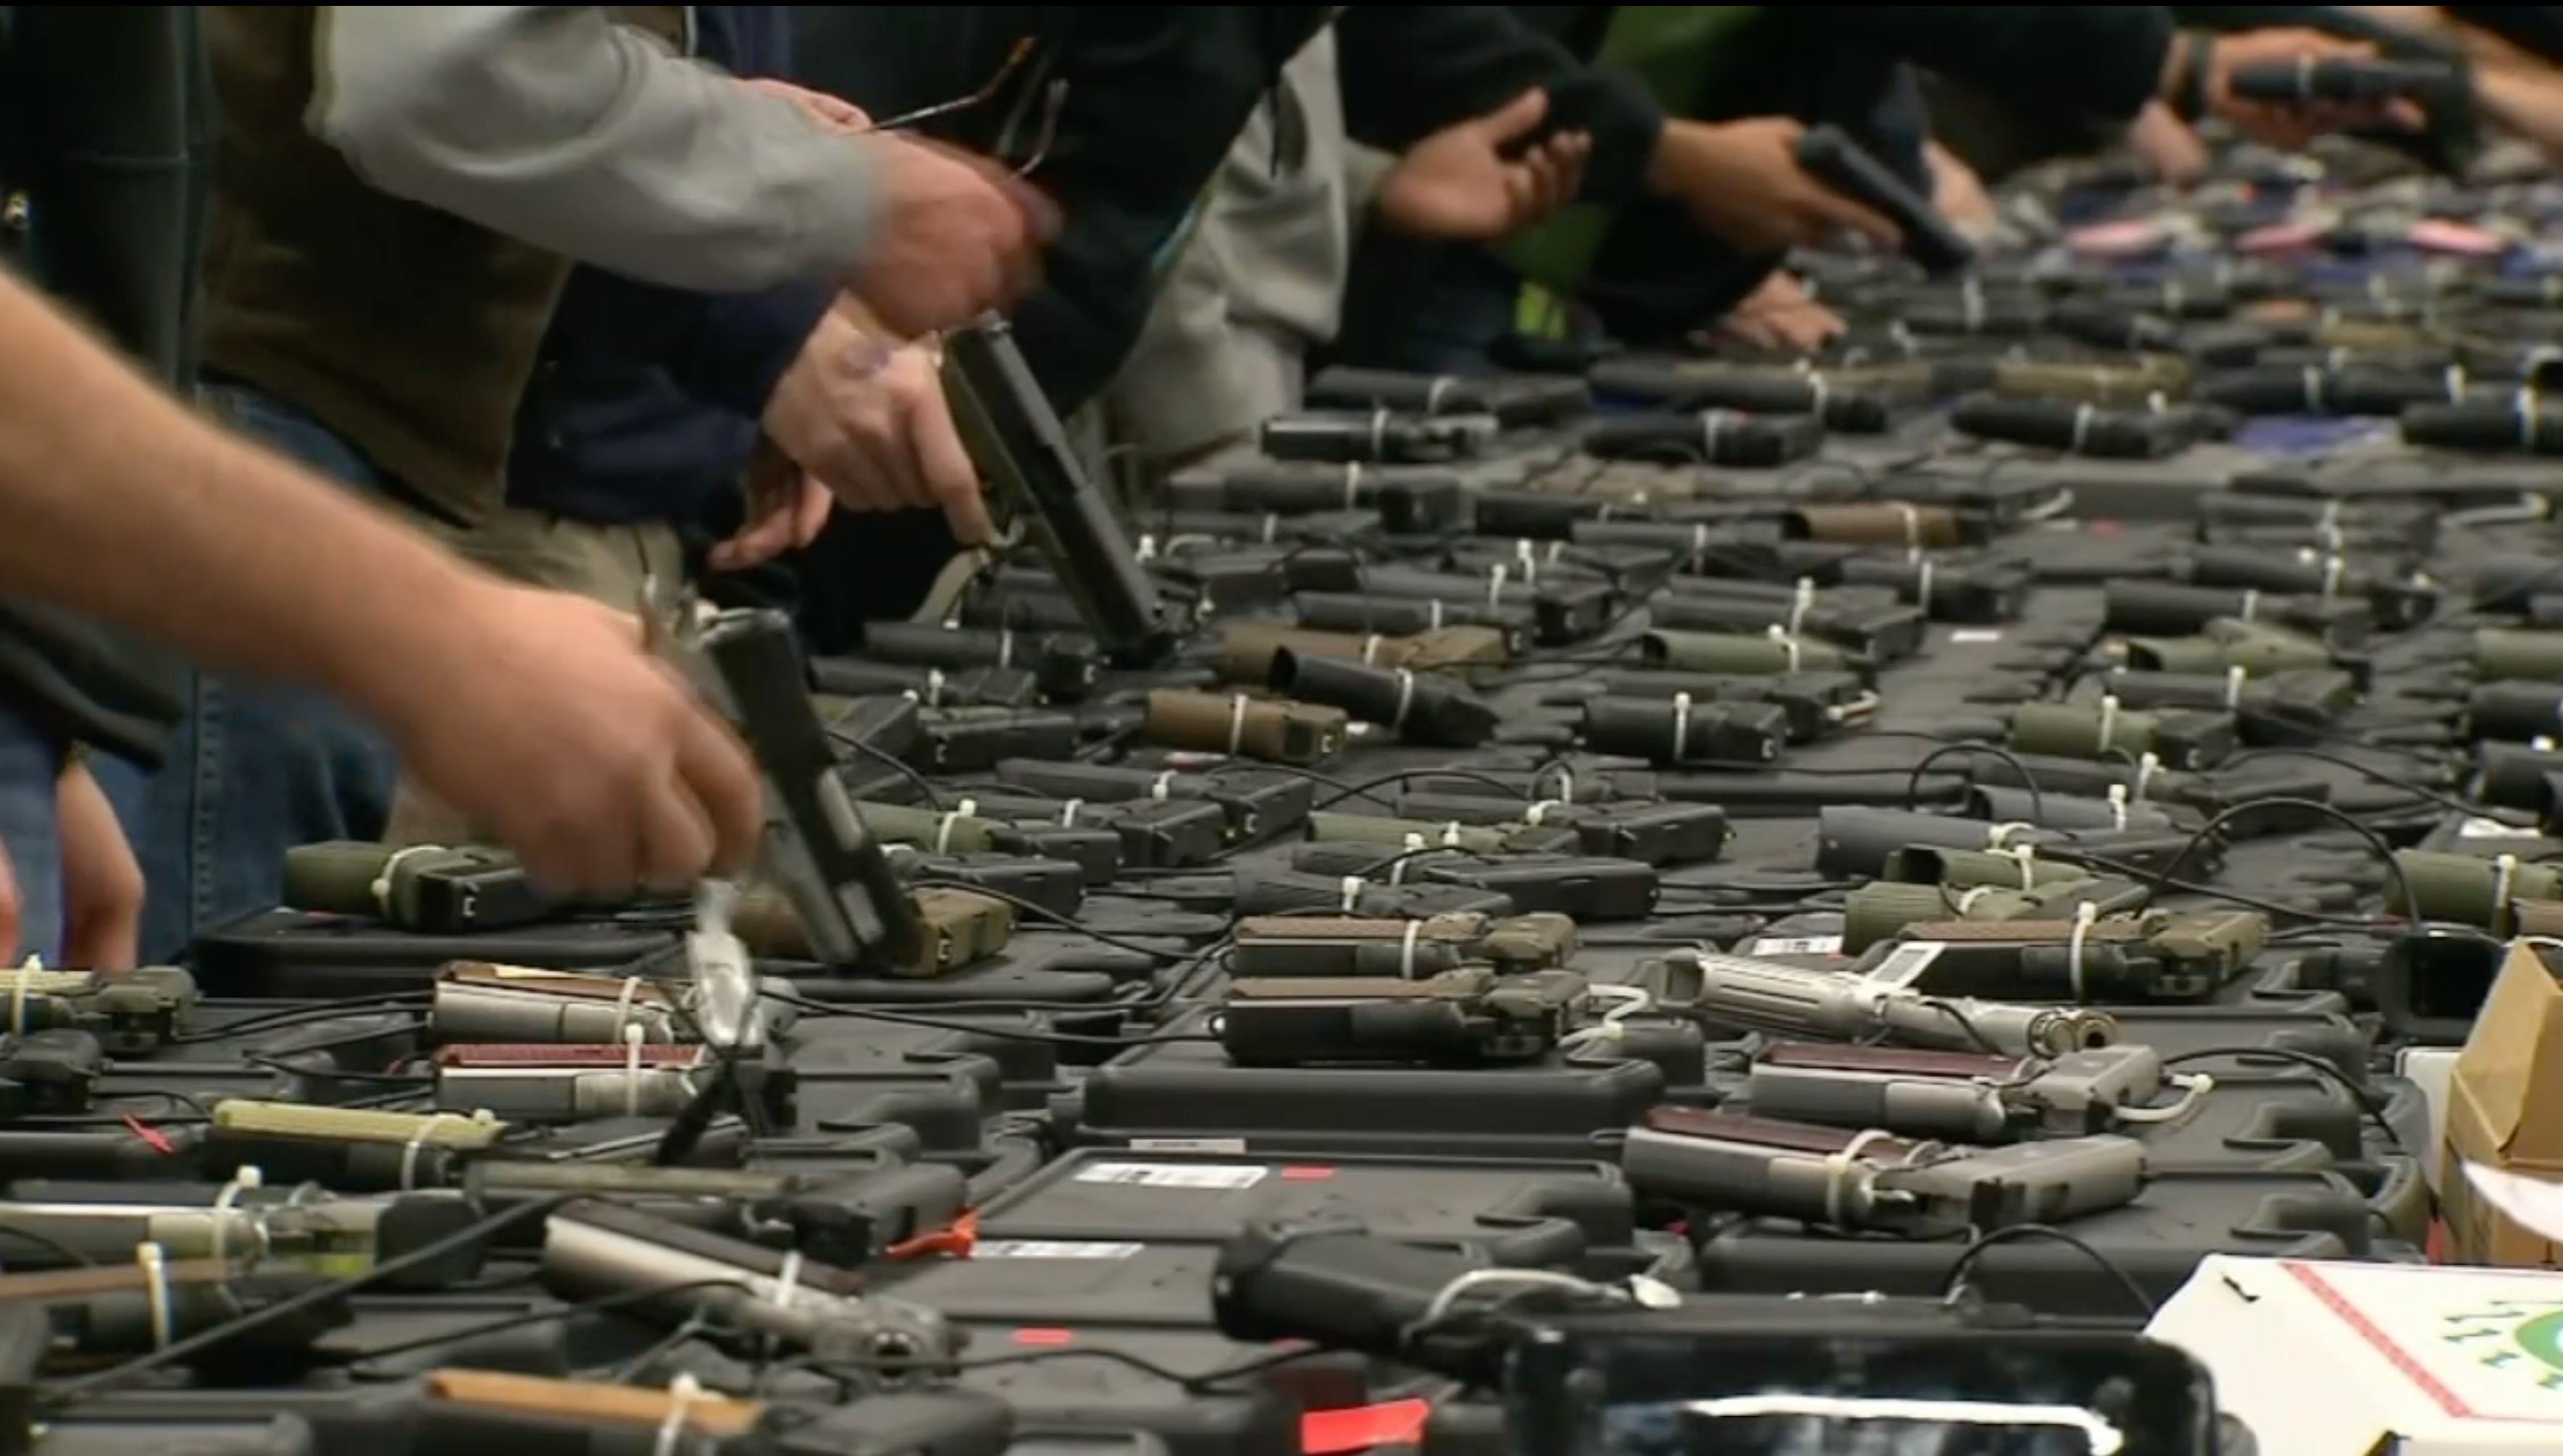 1 in 6 North Carolina counties have more gun dealers than mental health providers￼